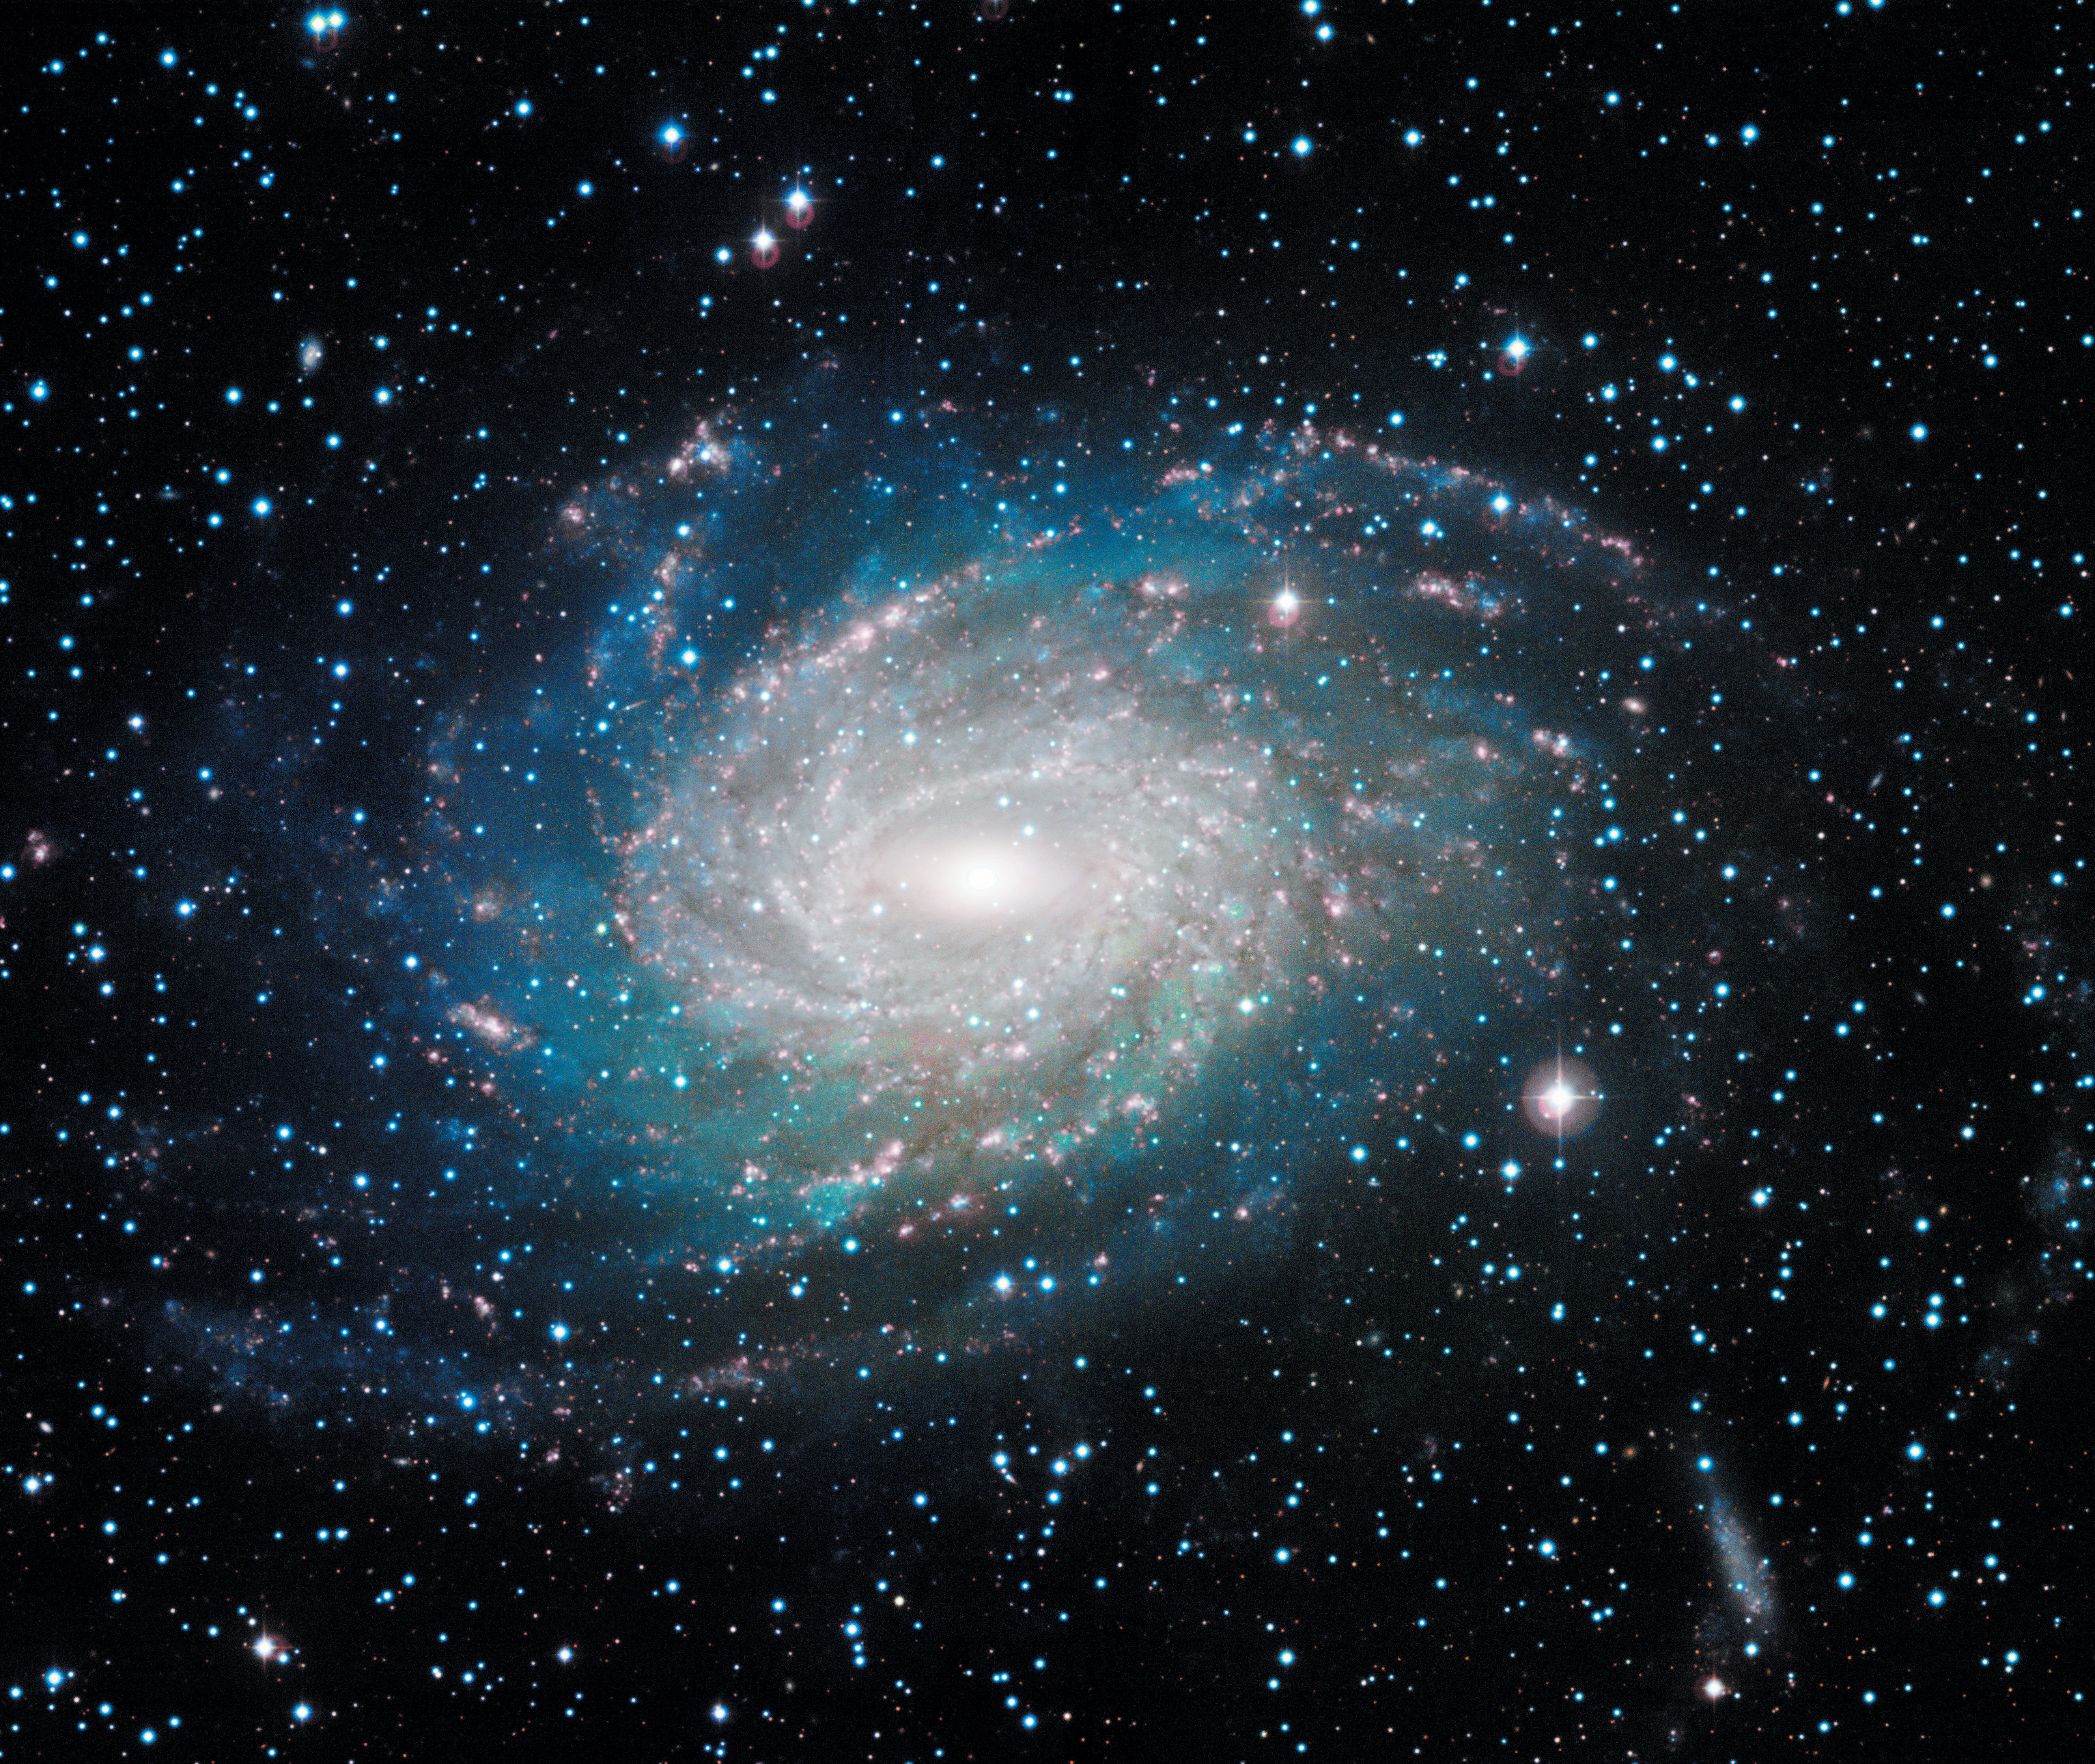 Spiral galaxy show against black background